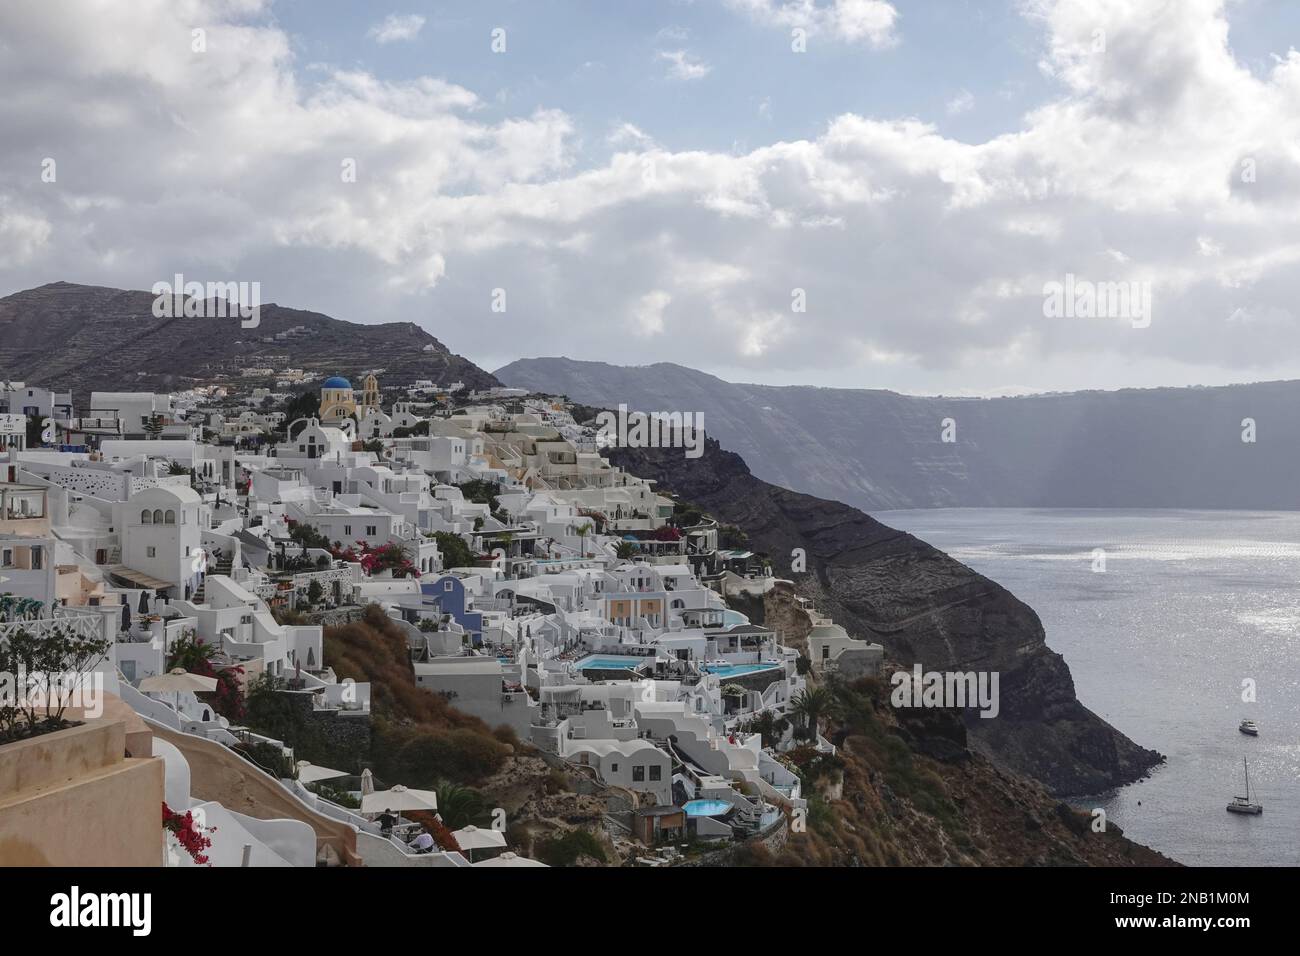 Santorini, one of the Cyclades islands in the Aegean Sea, Greece Stock Photo